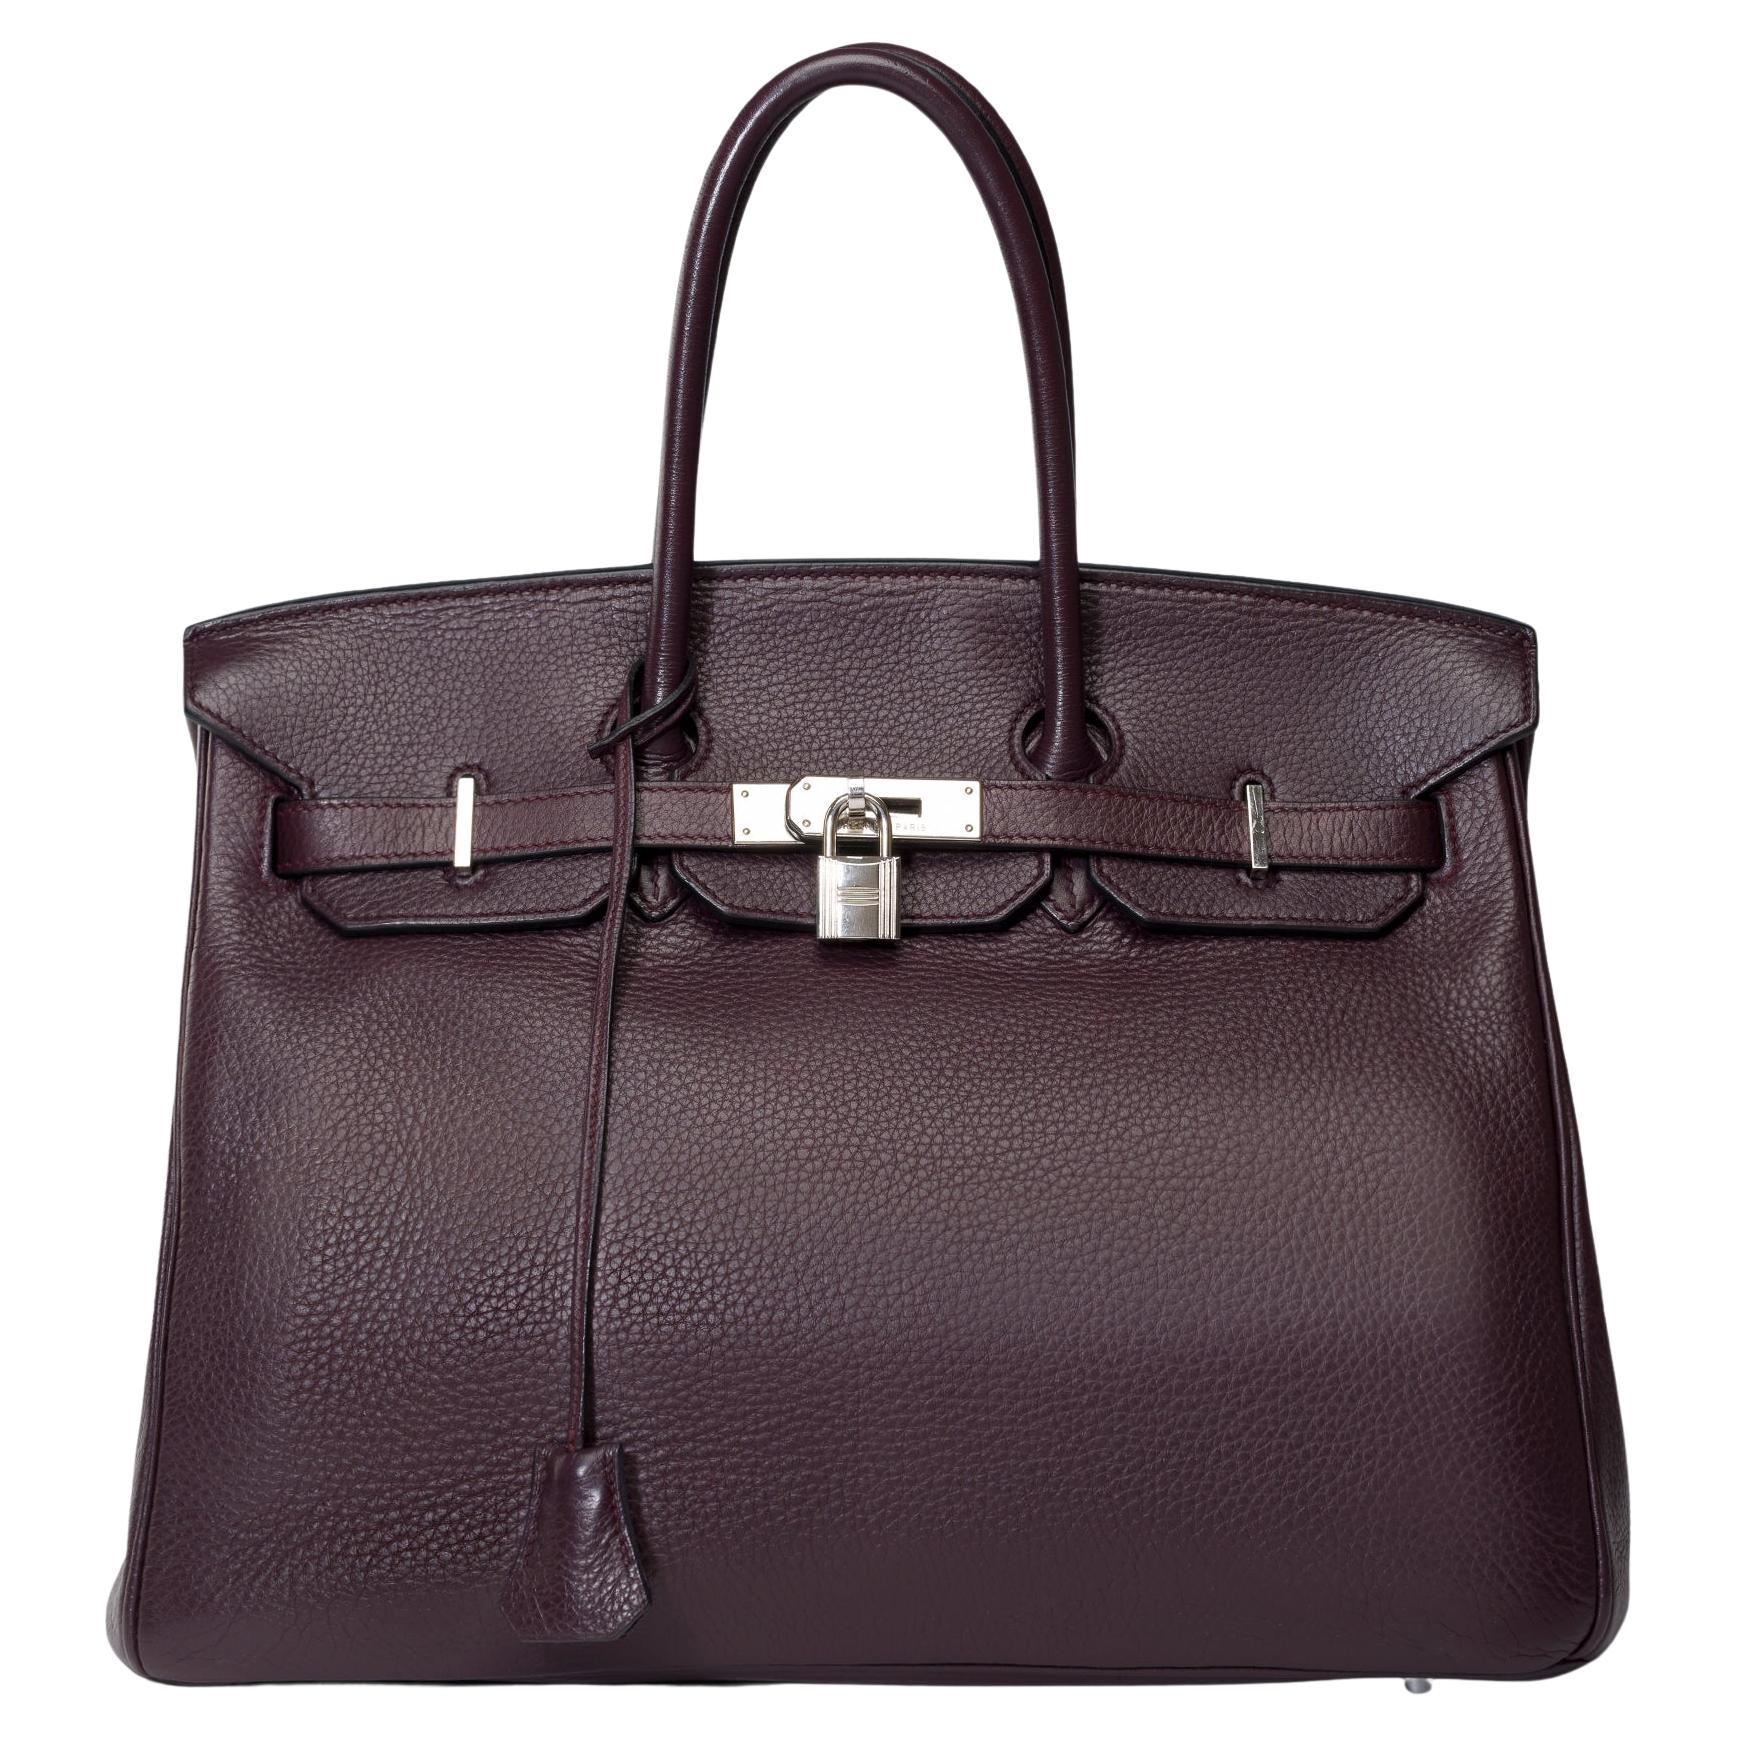 Amazing Hermès Birkin 35 handbag in Togo Raisin leather, SHW For Sale